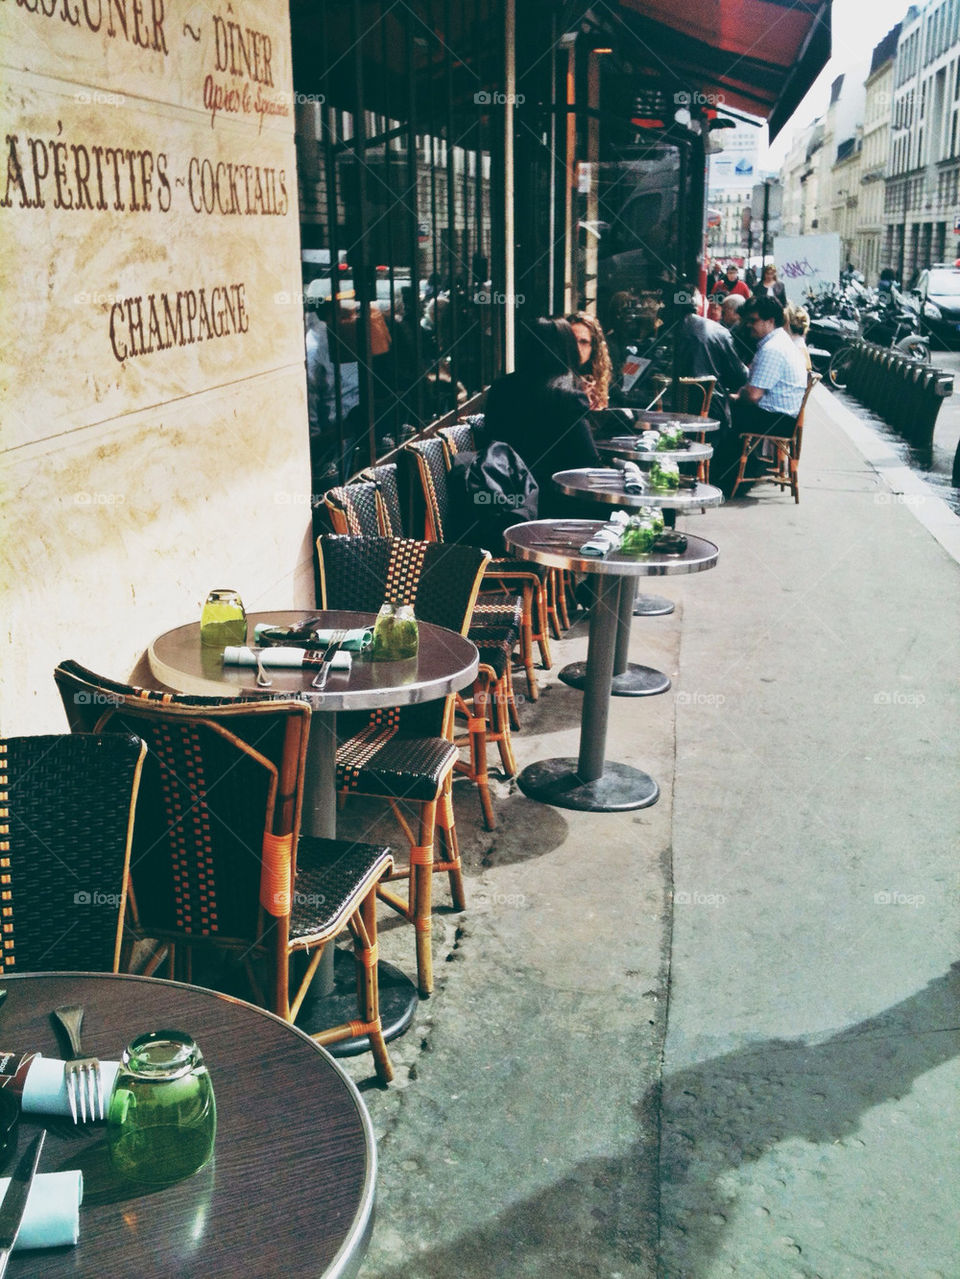 Outdoor seating at a Parisian cafe.